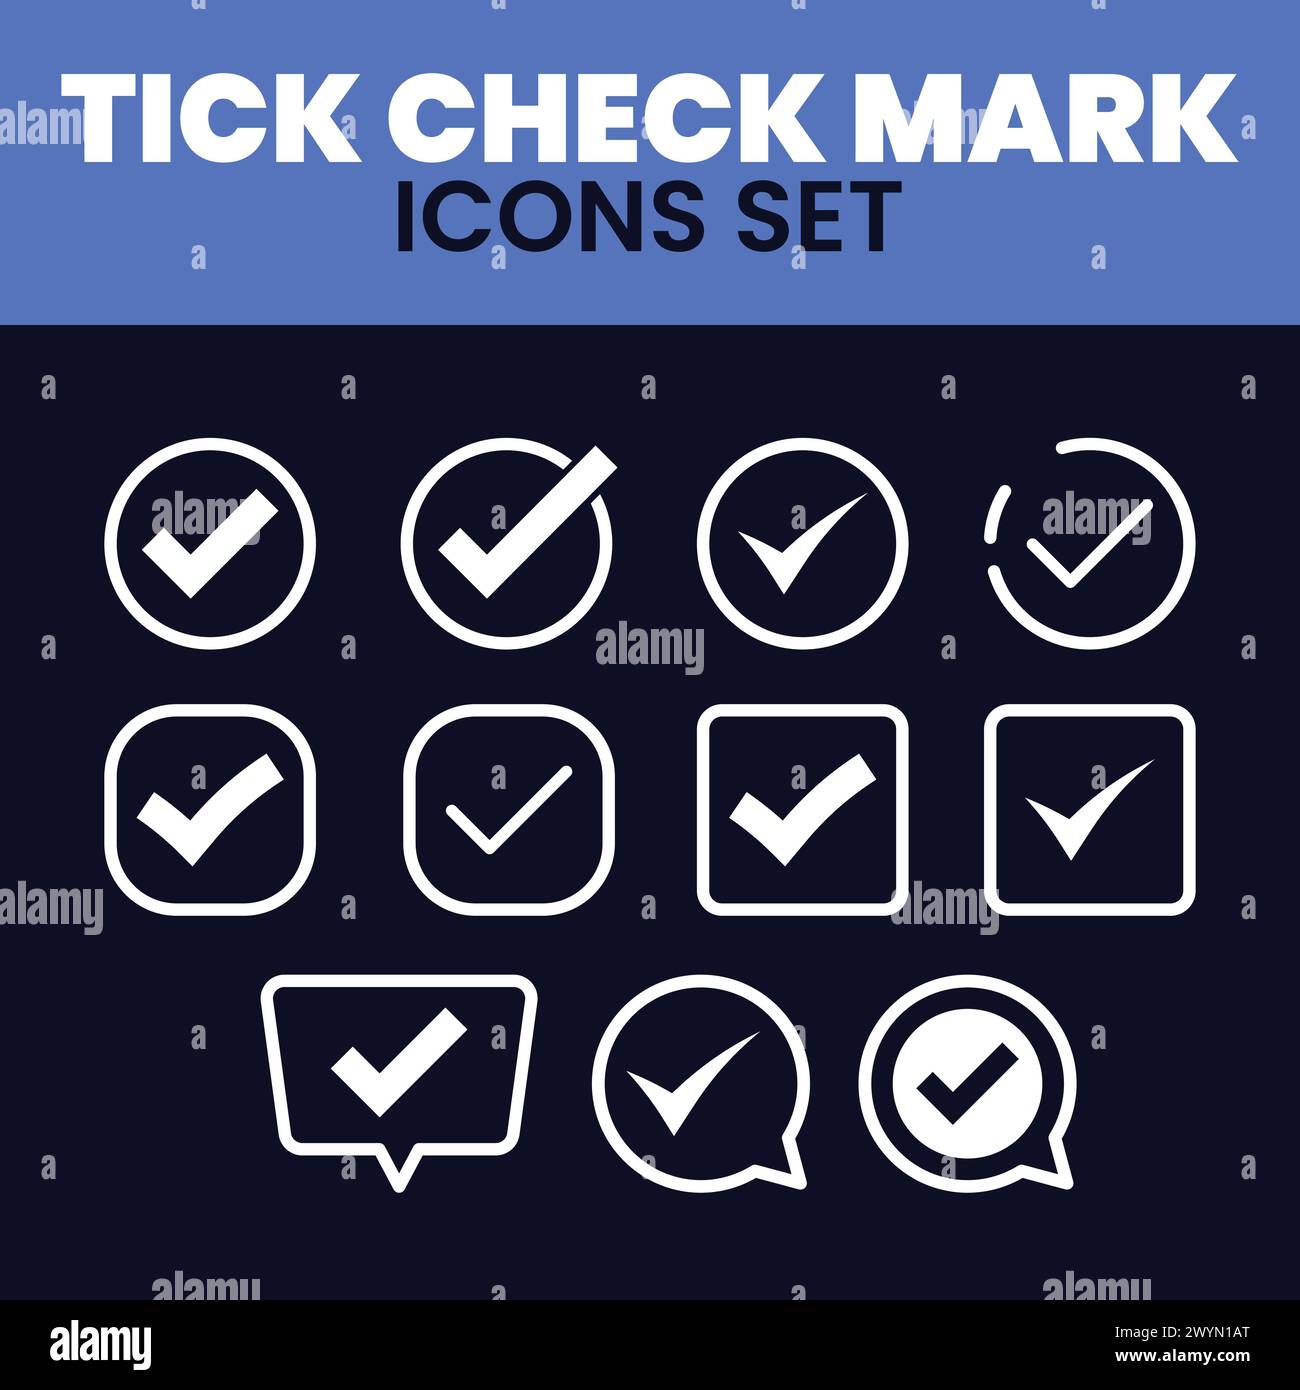 Check Mark Icons Set Vector Tick Mark Illustration Correction Mark Approve Line TIck Check Mark Icons Set Stock Vector